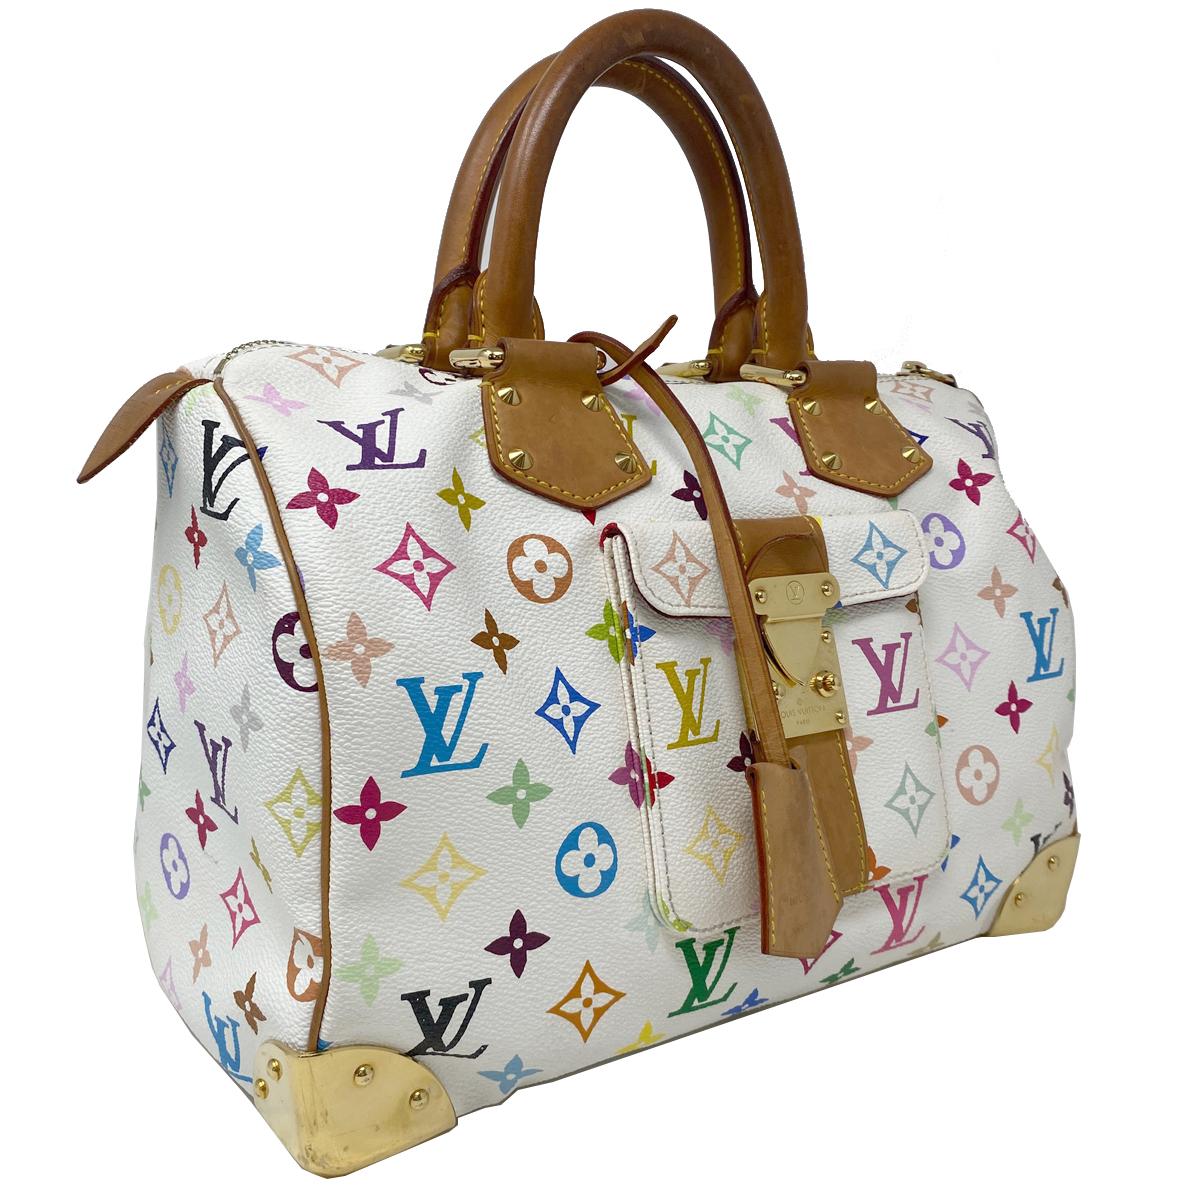 Company-Louis Vuitton
Style-Louis Vuitton x Takashi Murakami - Speedy Monogram 30 White Multicolor Handbag
Outside -Bag exterior has no rips , tears or stains 
Inside -No rips , tears or stains 
Pockets-1 Interior pockets - 1 Exterior 
Handles/